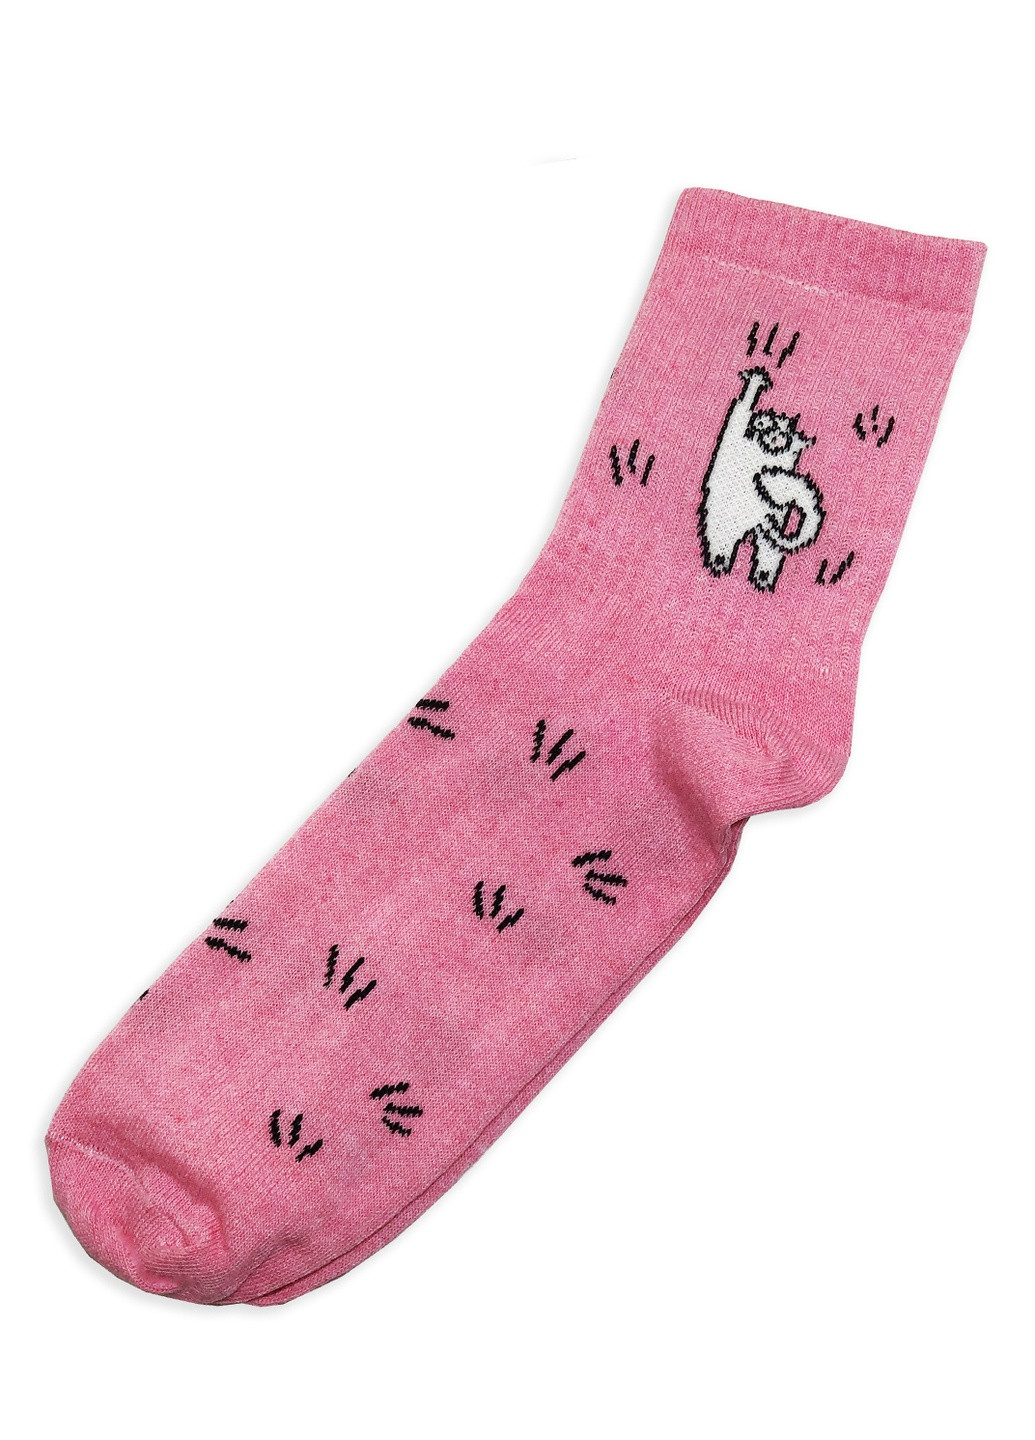 Носки Кот царапка Rock'n'socks высокие (211258832)